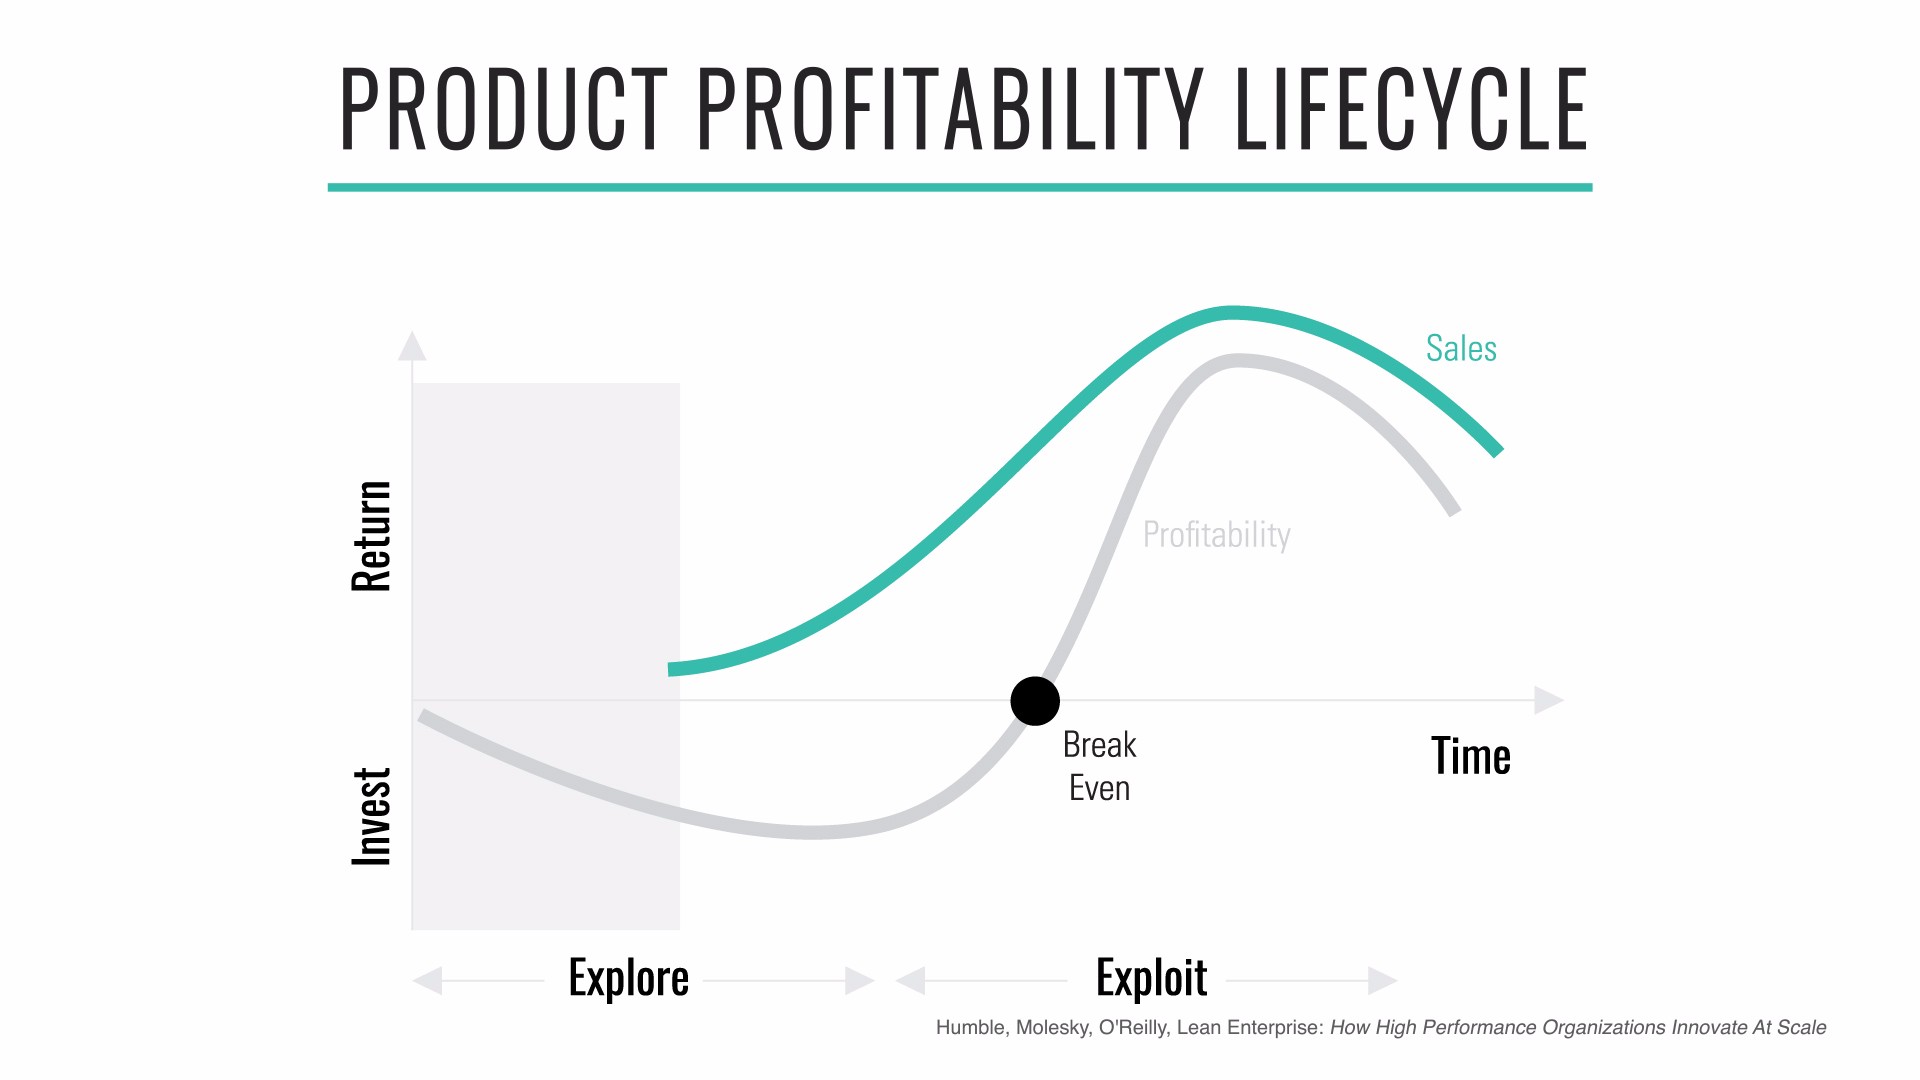 Product profitability lifecycle